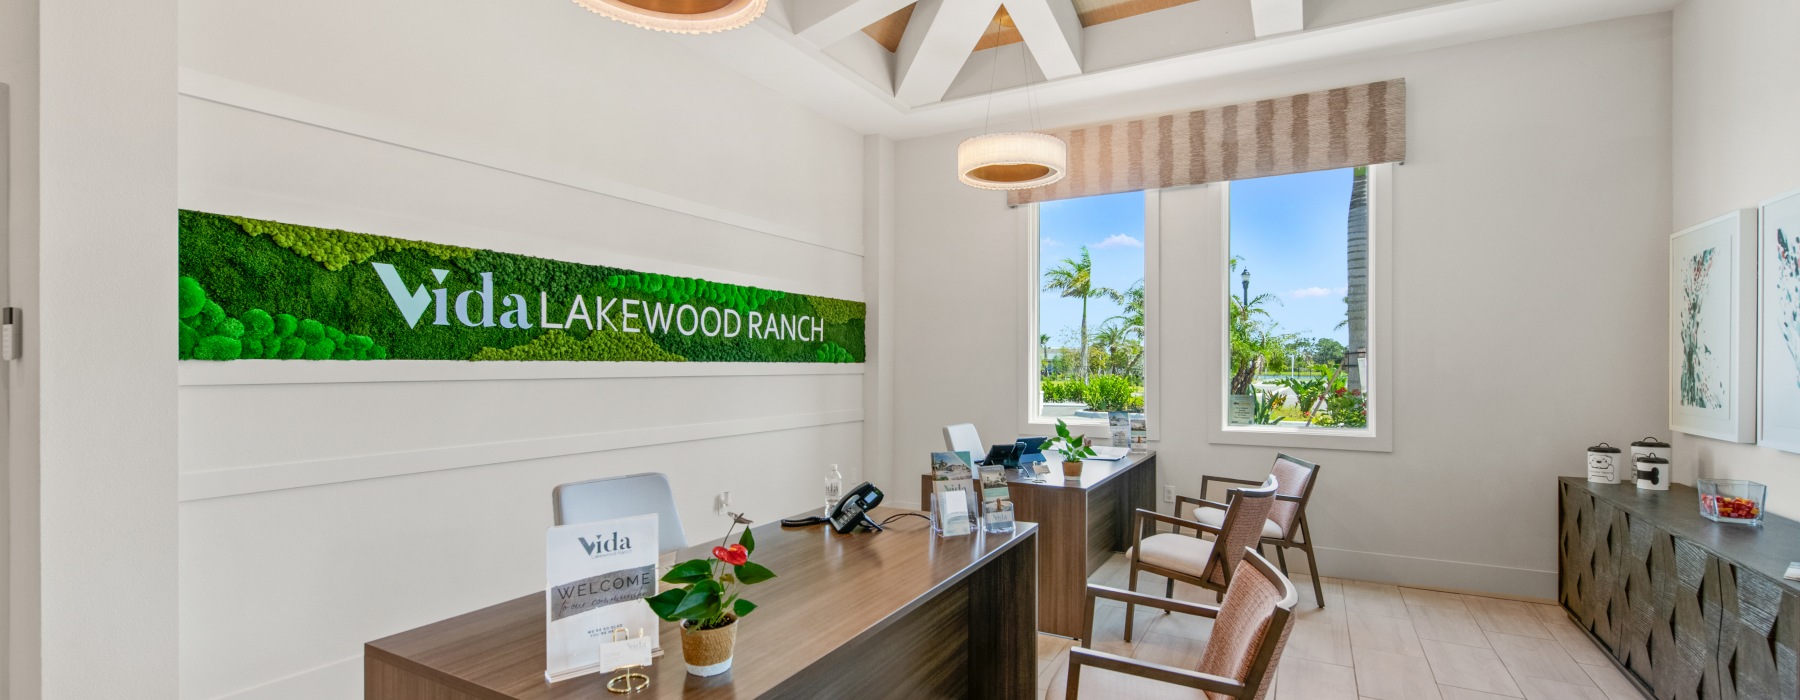 Vida Lakewood Ranch's leasing office desks